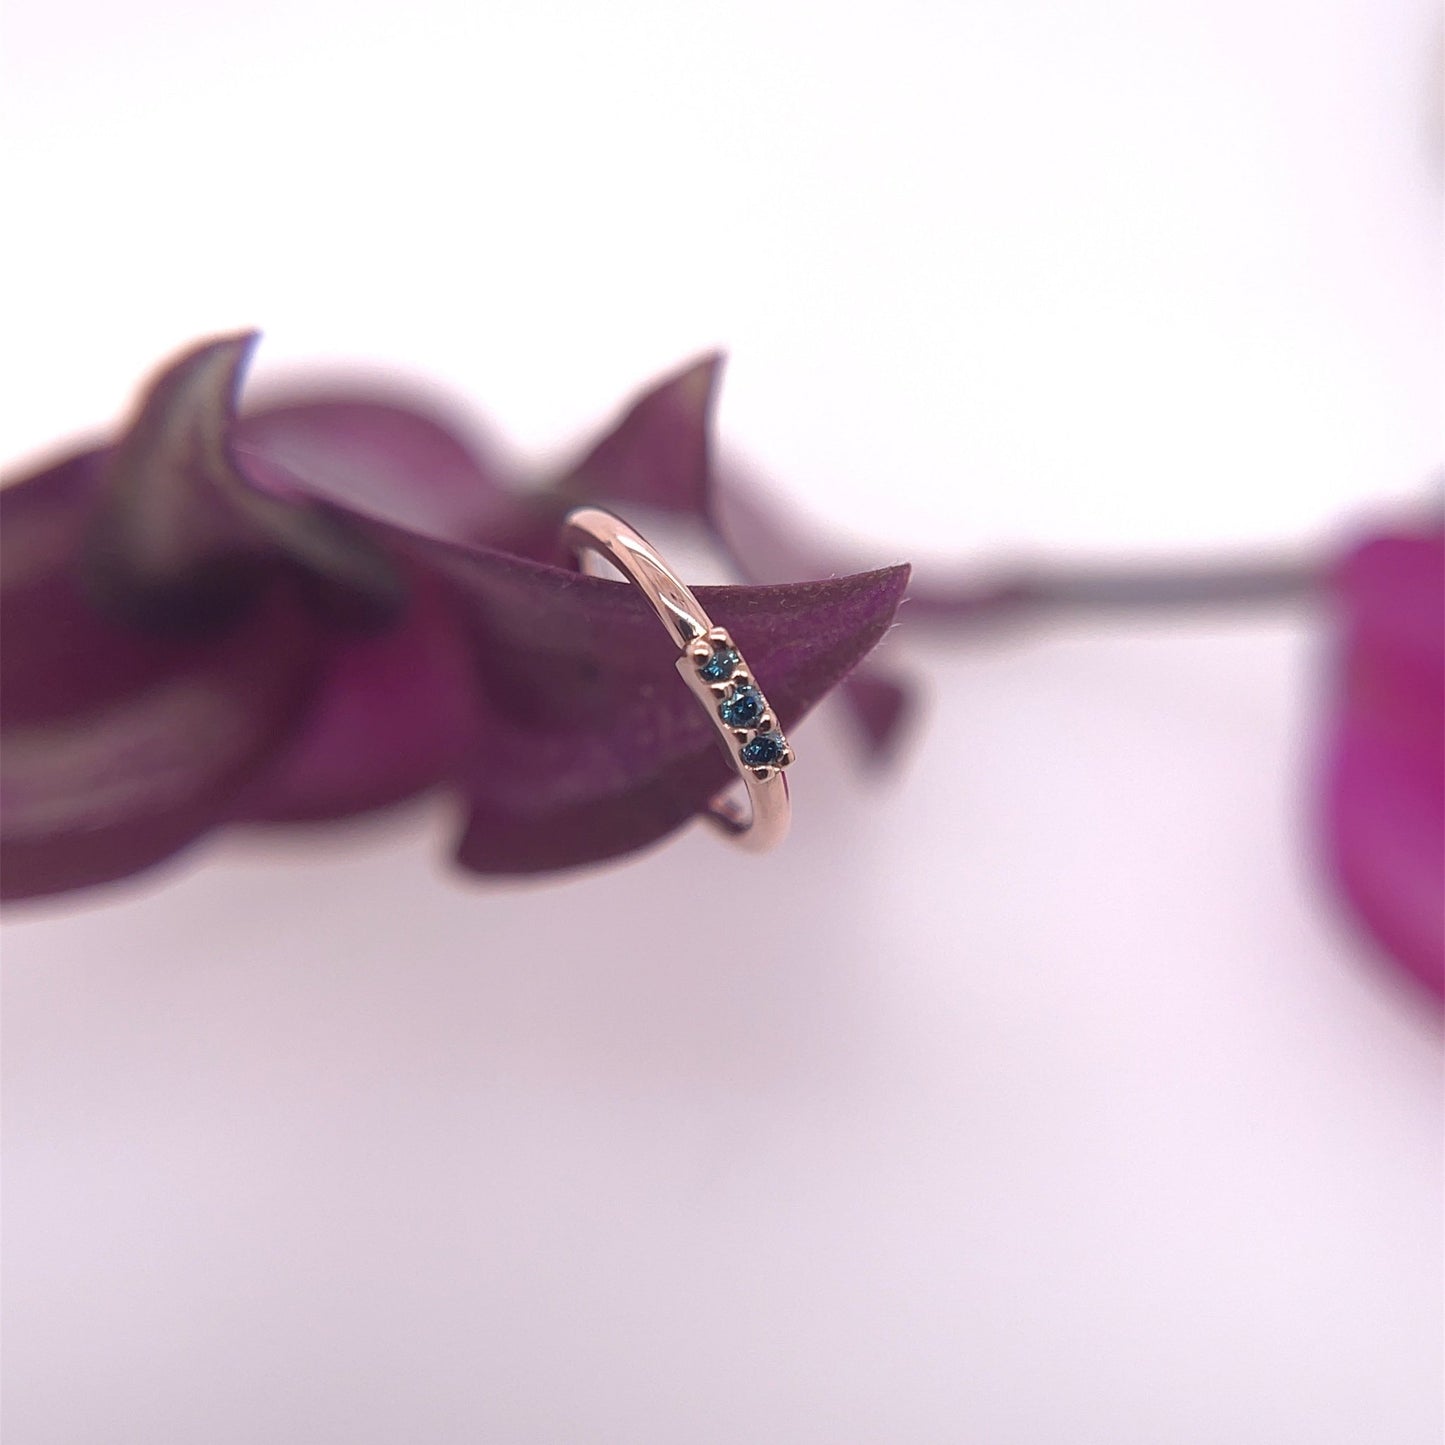 3 Gem Blaze Fixed Ring - Navel Orientation - 1mm Gemstones - Agave in Bloom